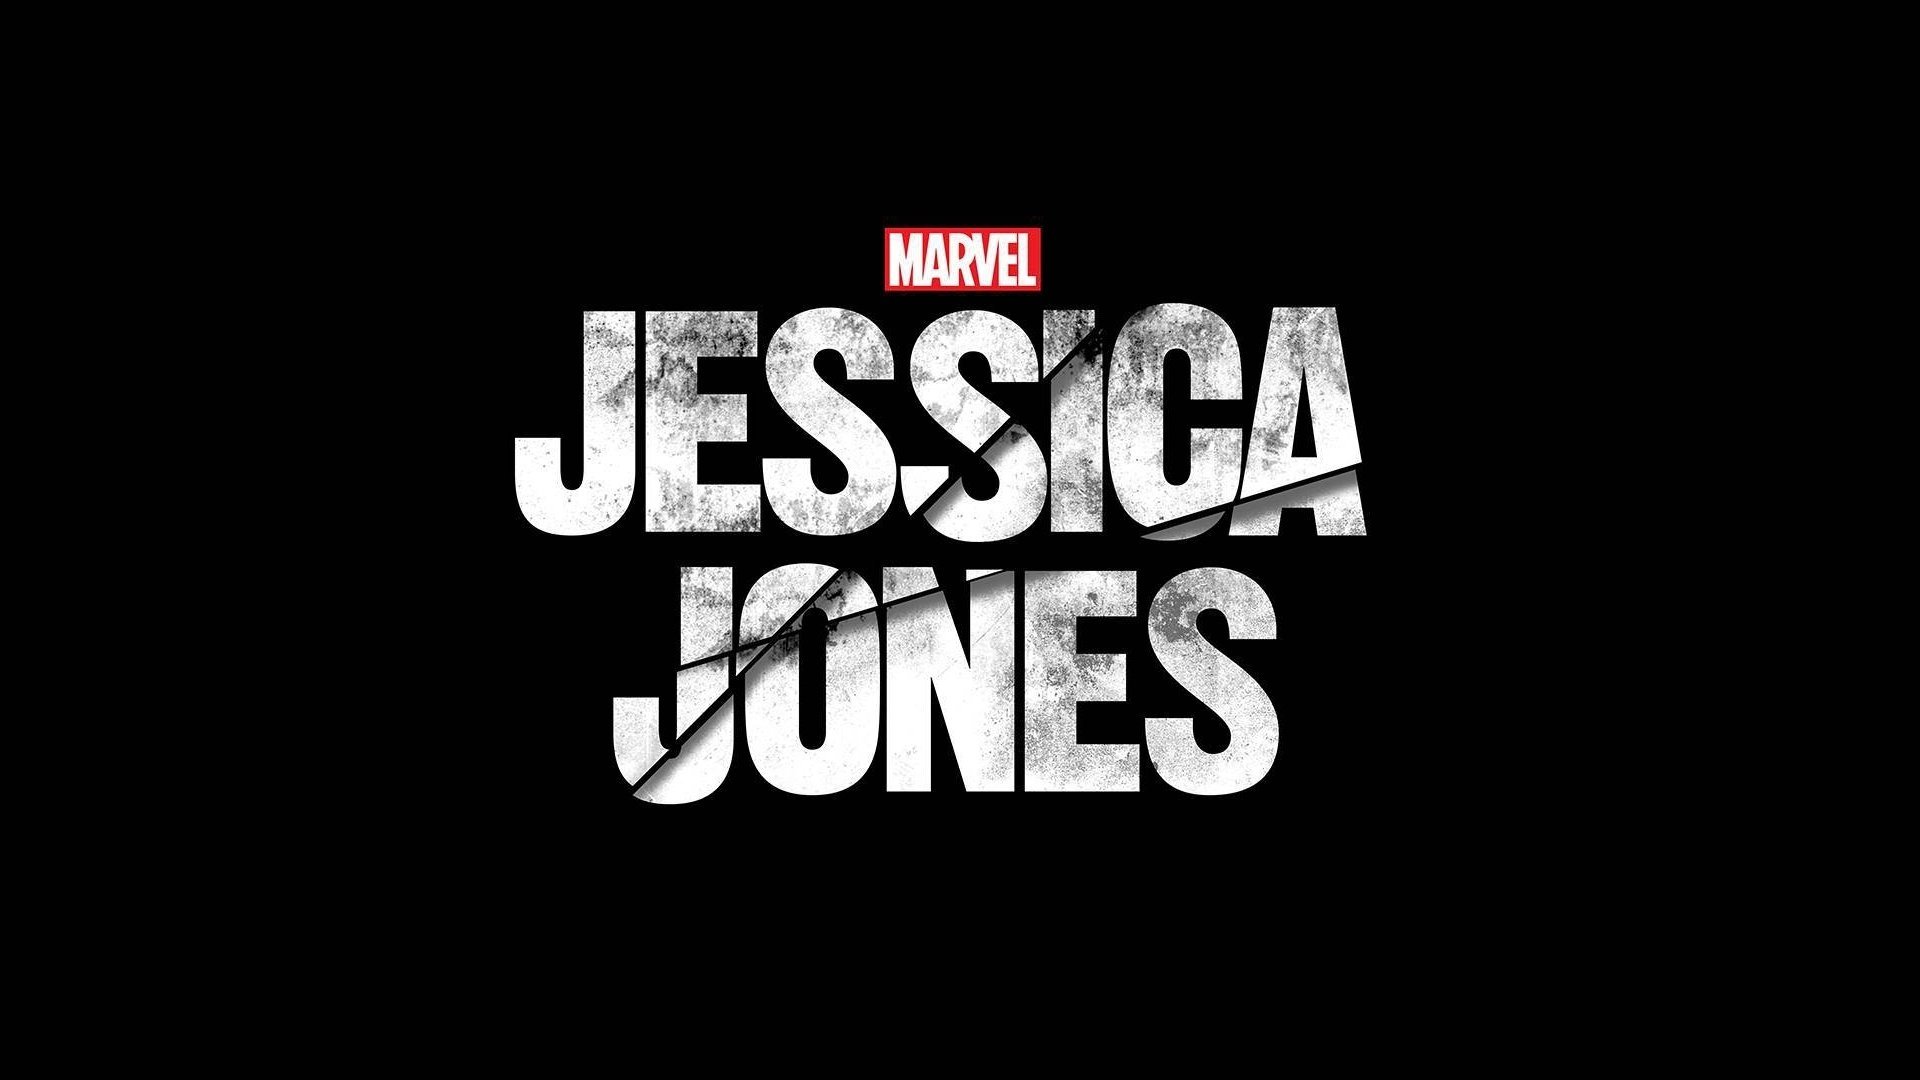 High resolution Jessica Jones full hd 1920x1080 background ID:202661 for computer